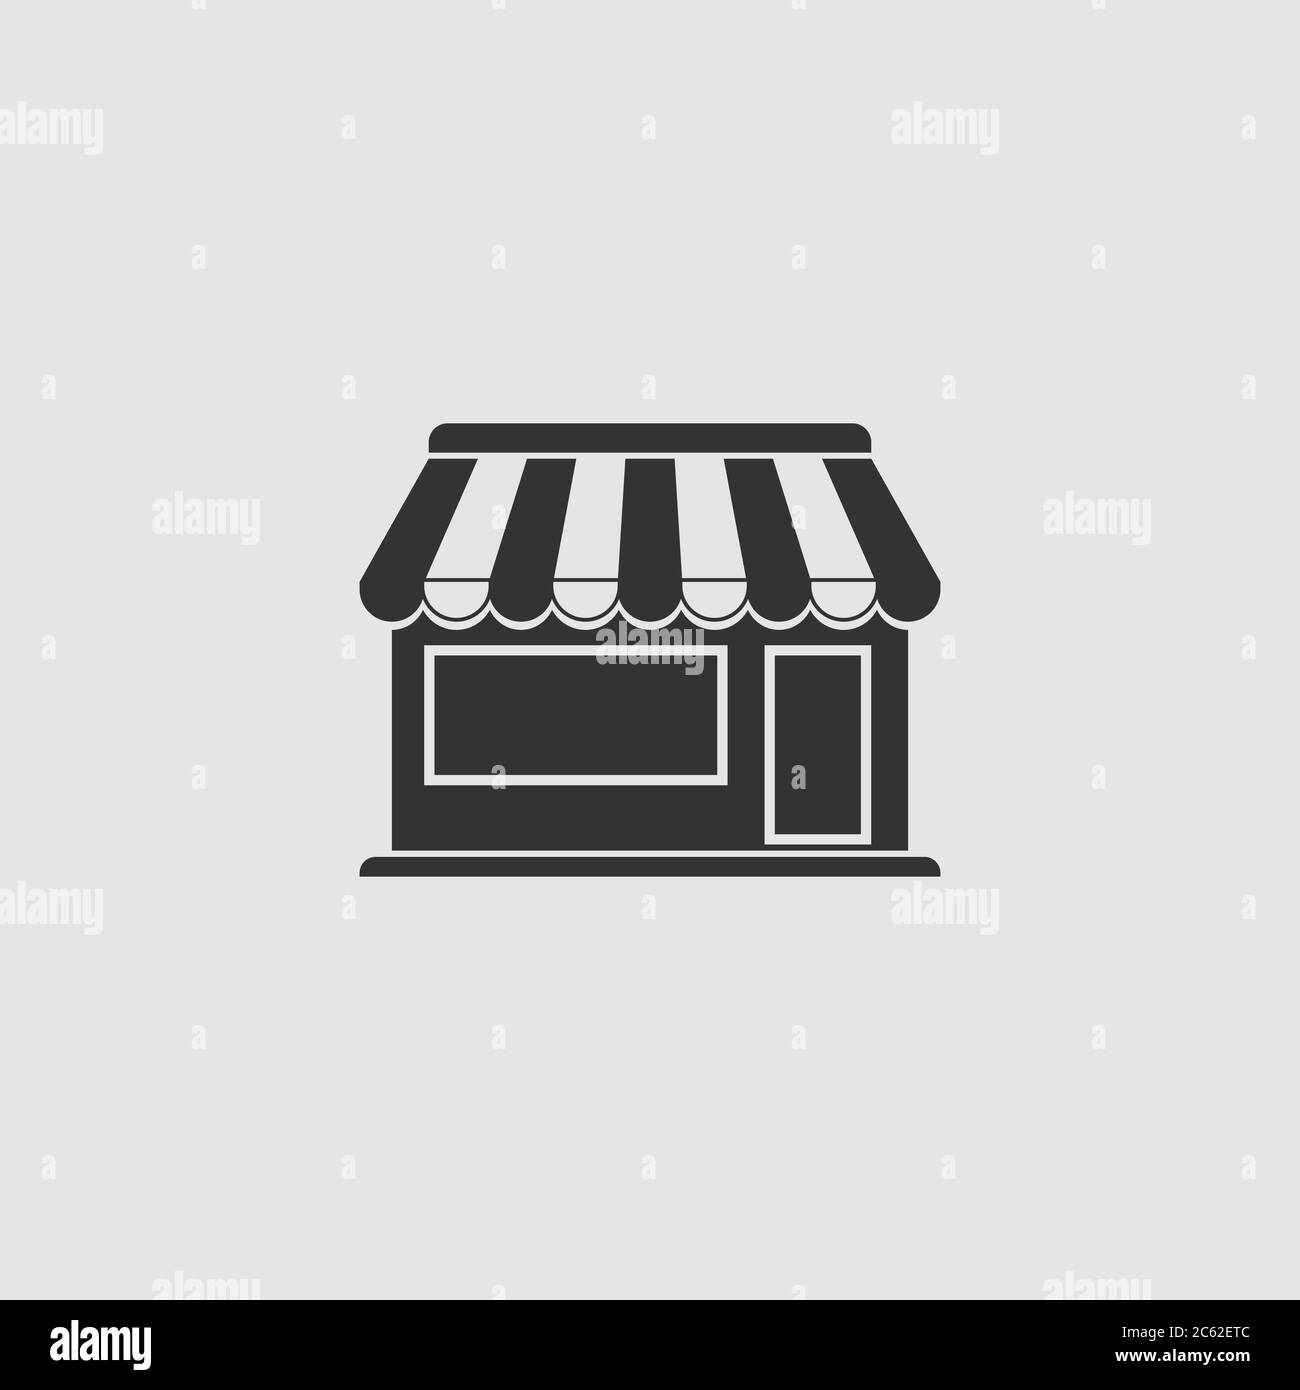 Showcase Kiosk icon flat. Black pictogram on grey background. Vector illustration symbol Stock Vector